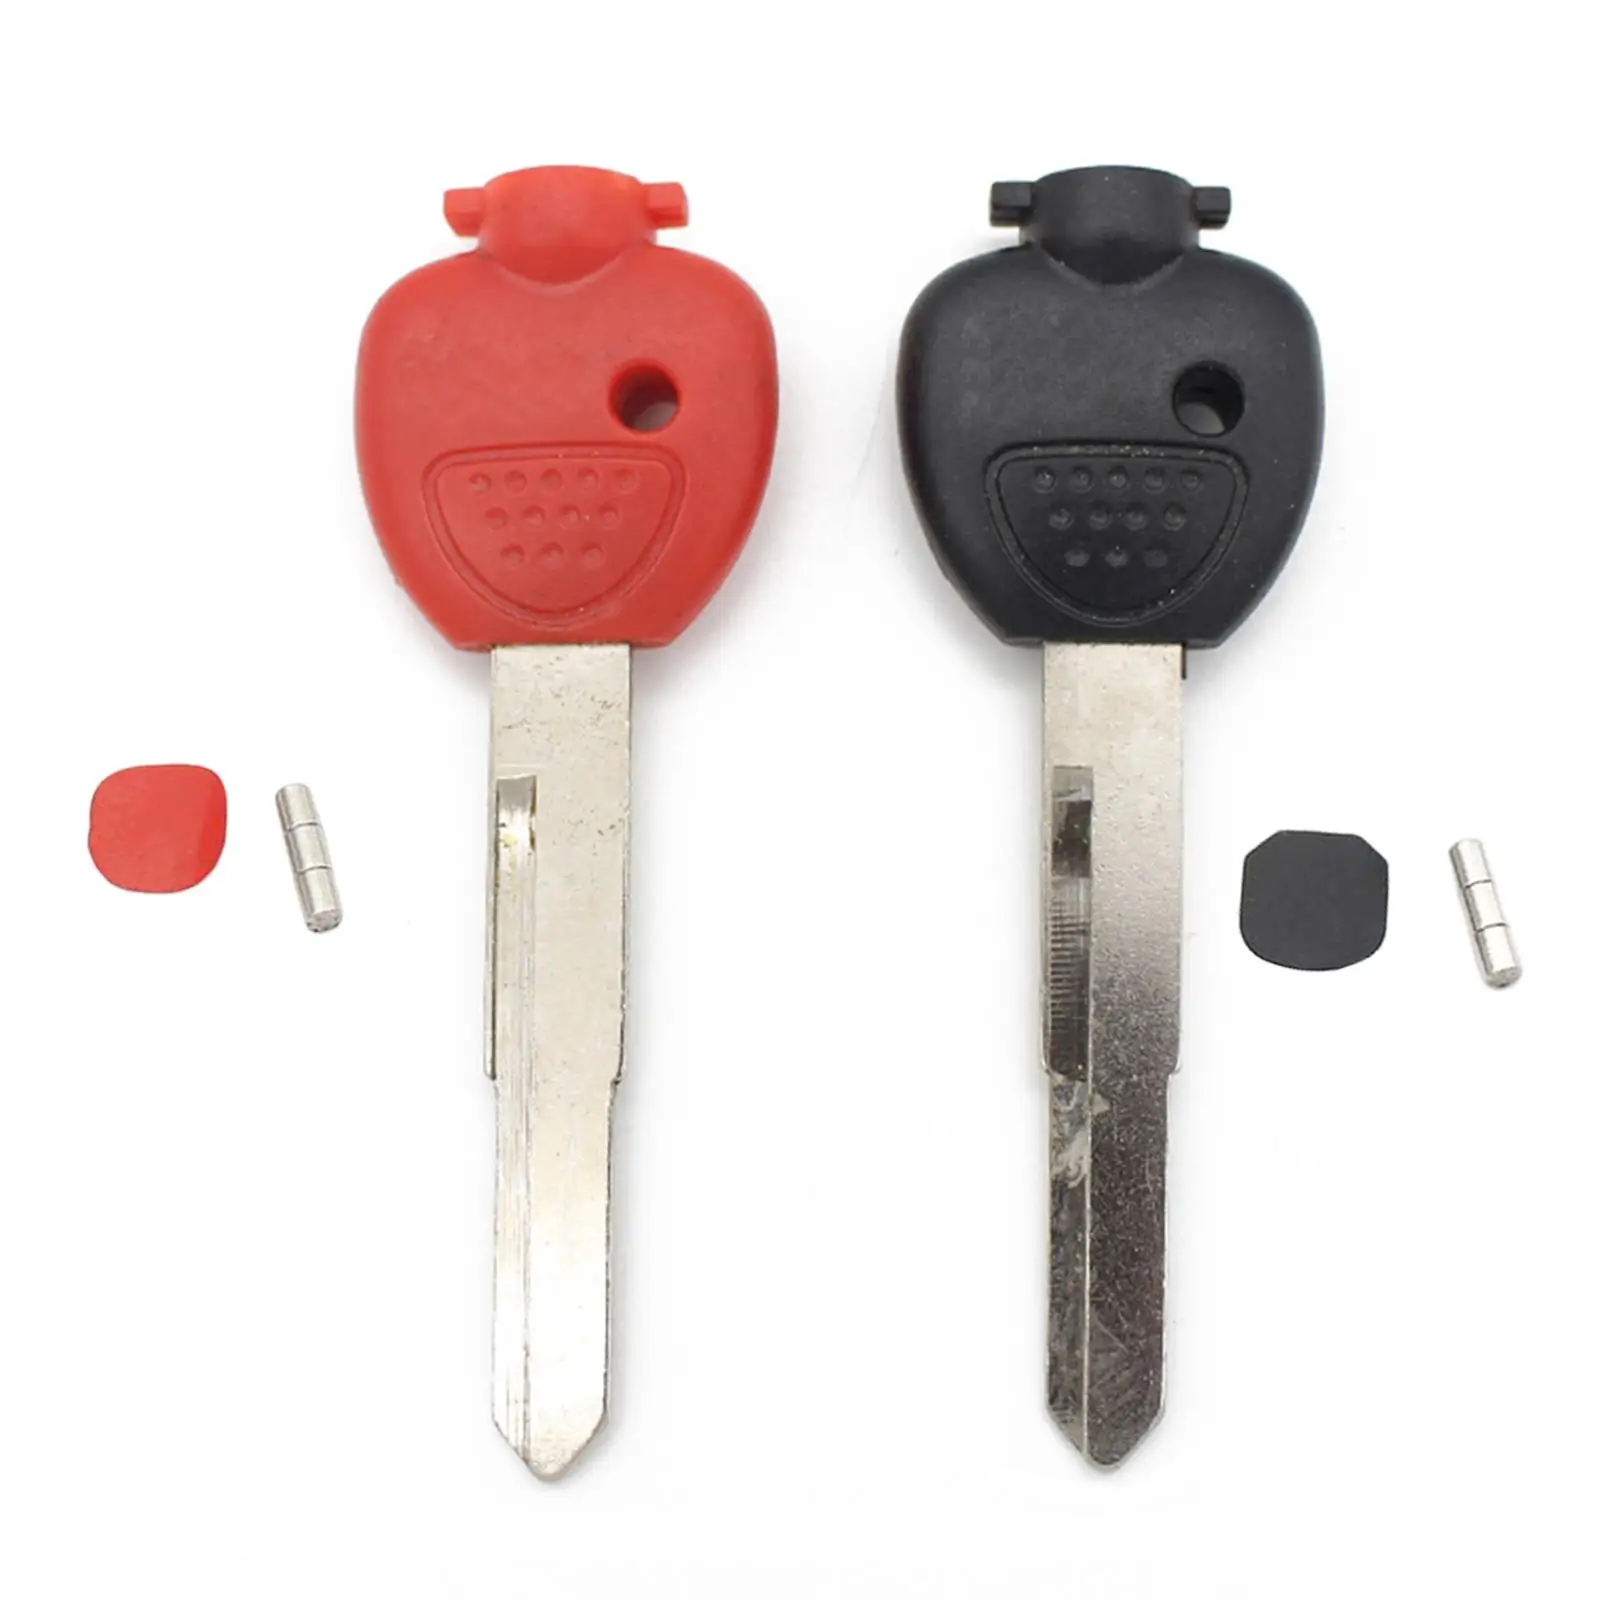  Blank Key Uncut Blade Backup Key for Majesty 250 professional